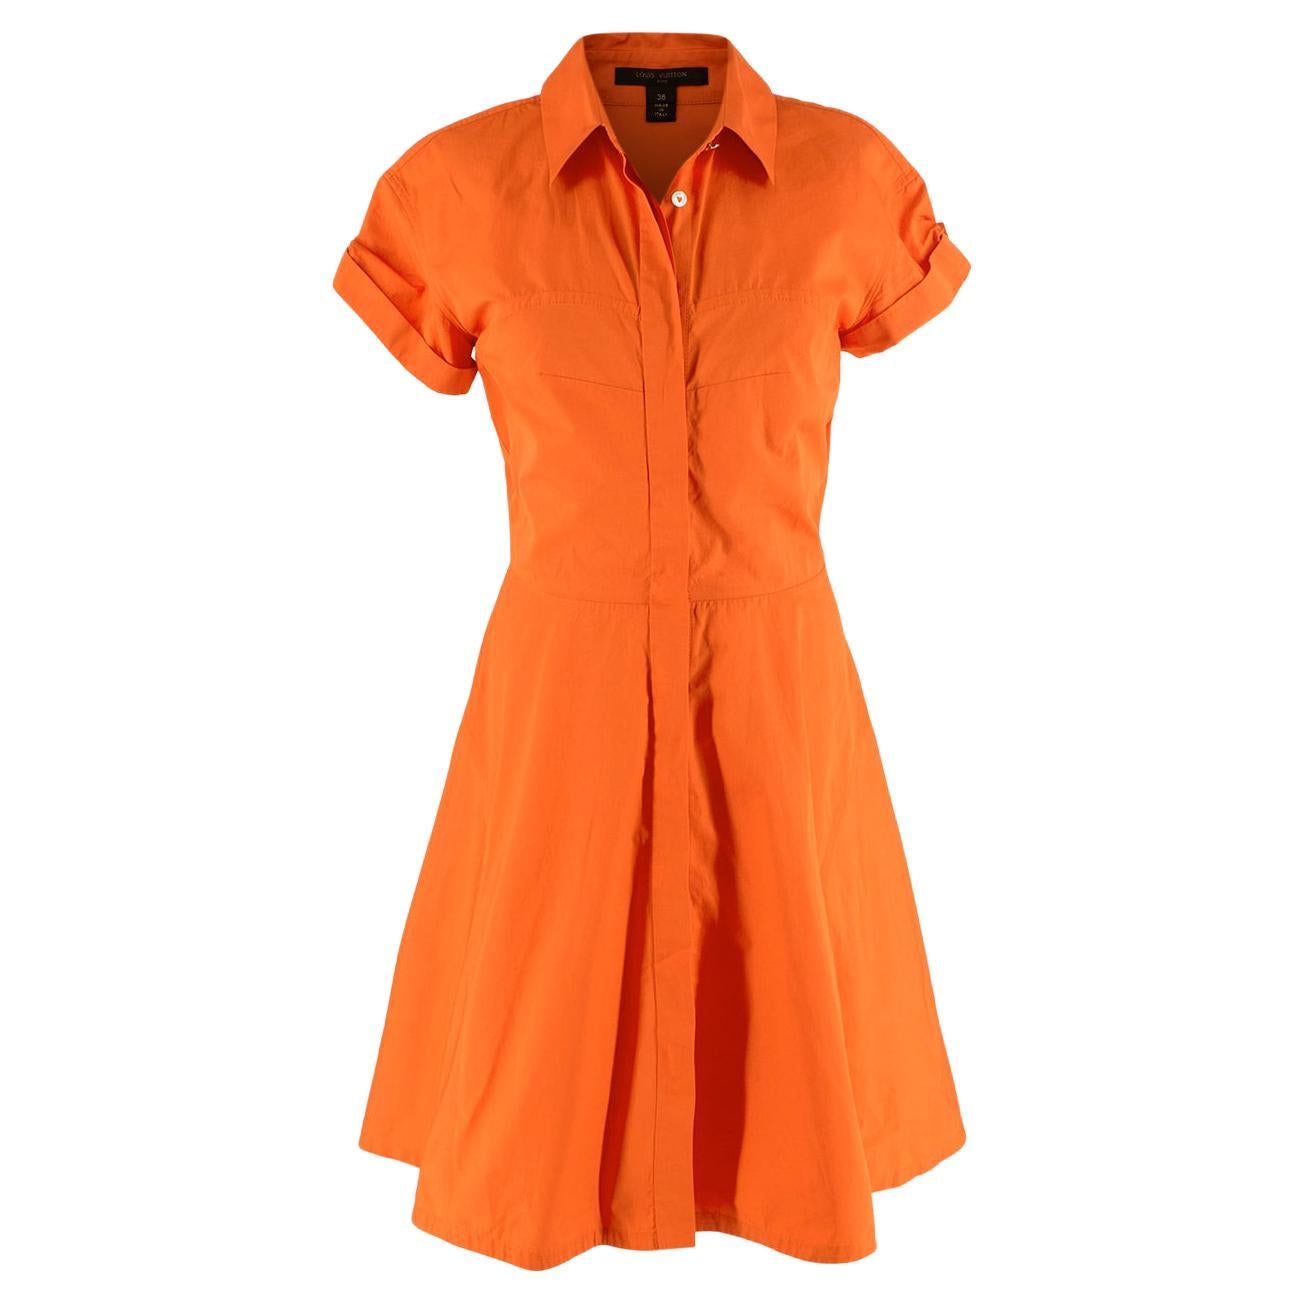 T-shirt Louis Vuitton Orange size S International in Cotton - 22817285